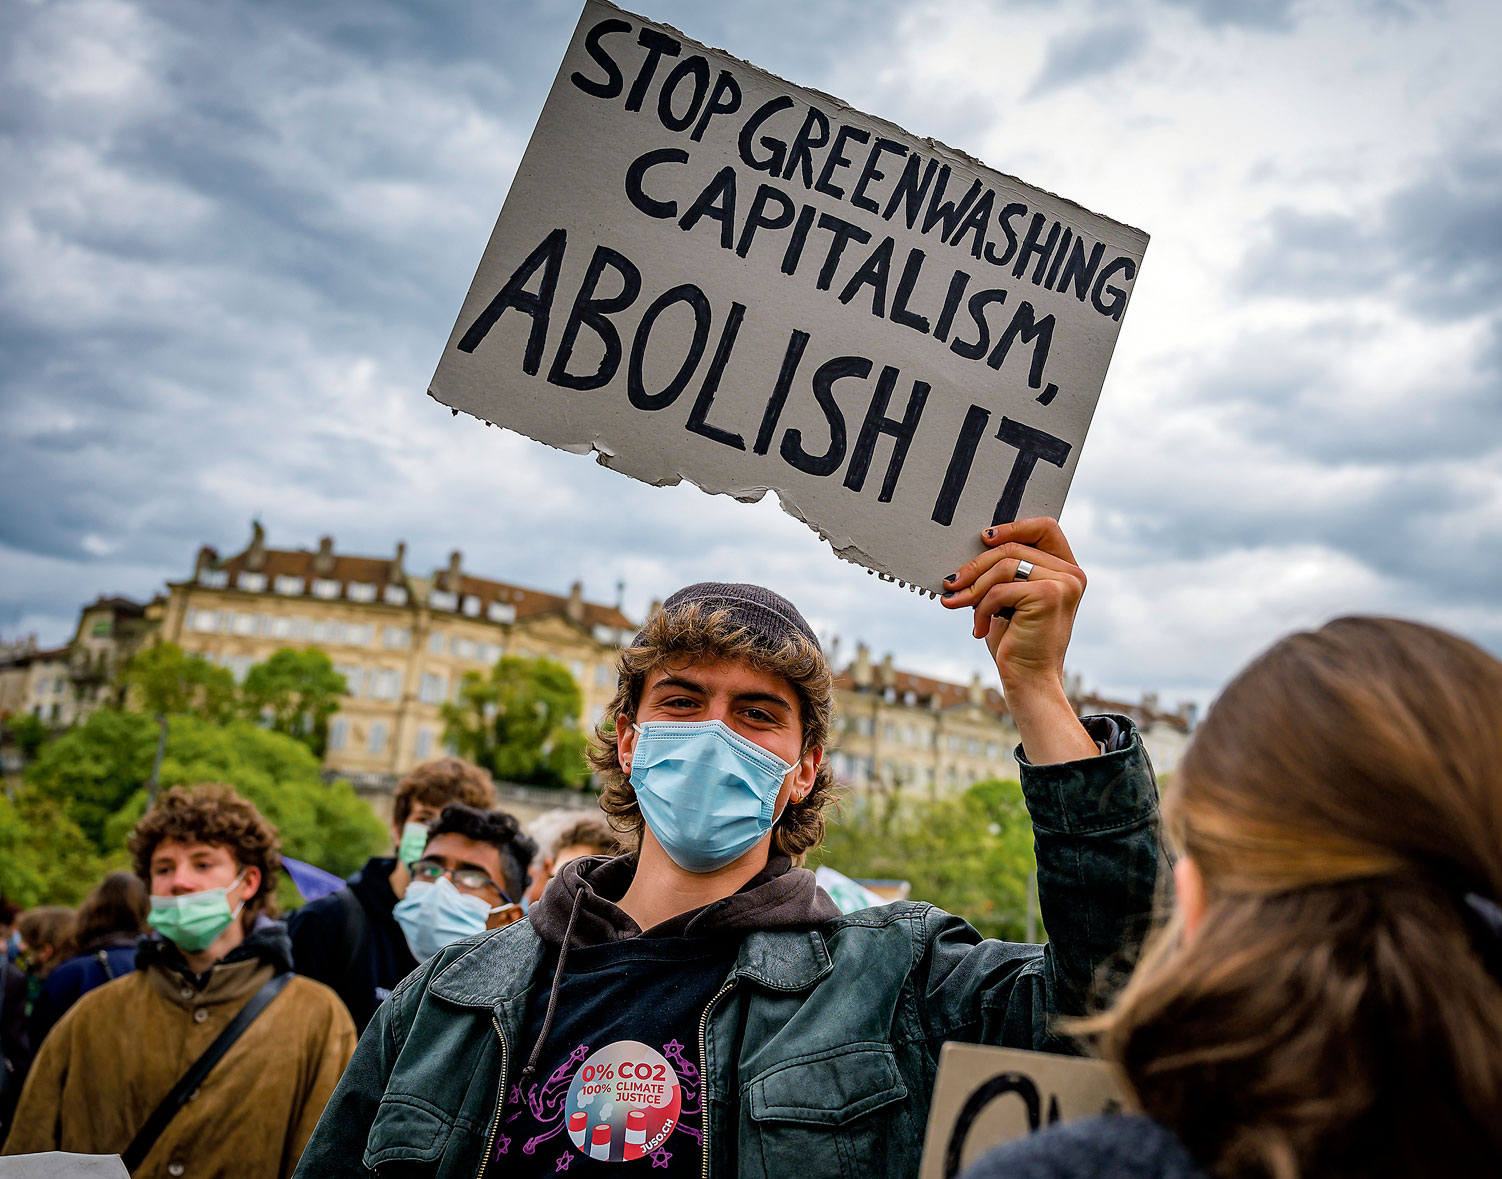 Un manifestant tient une banderole "Stop Greenwashing capitalism, abolish it”